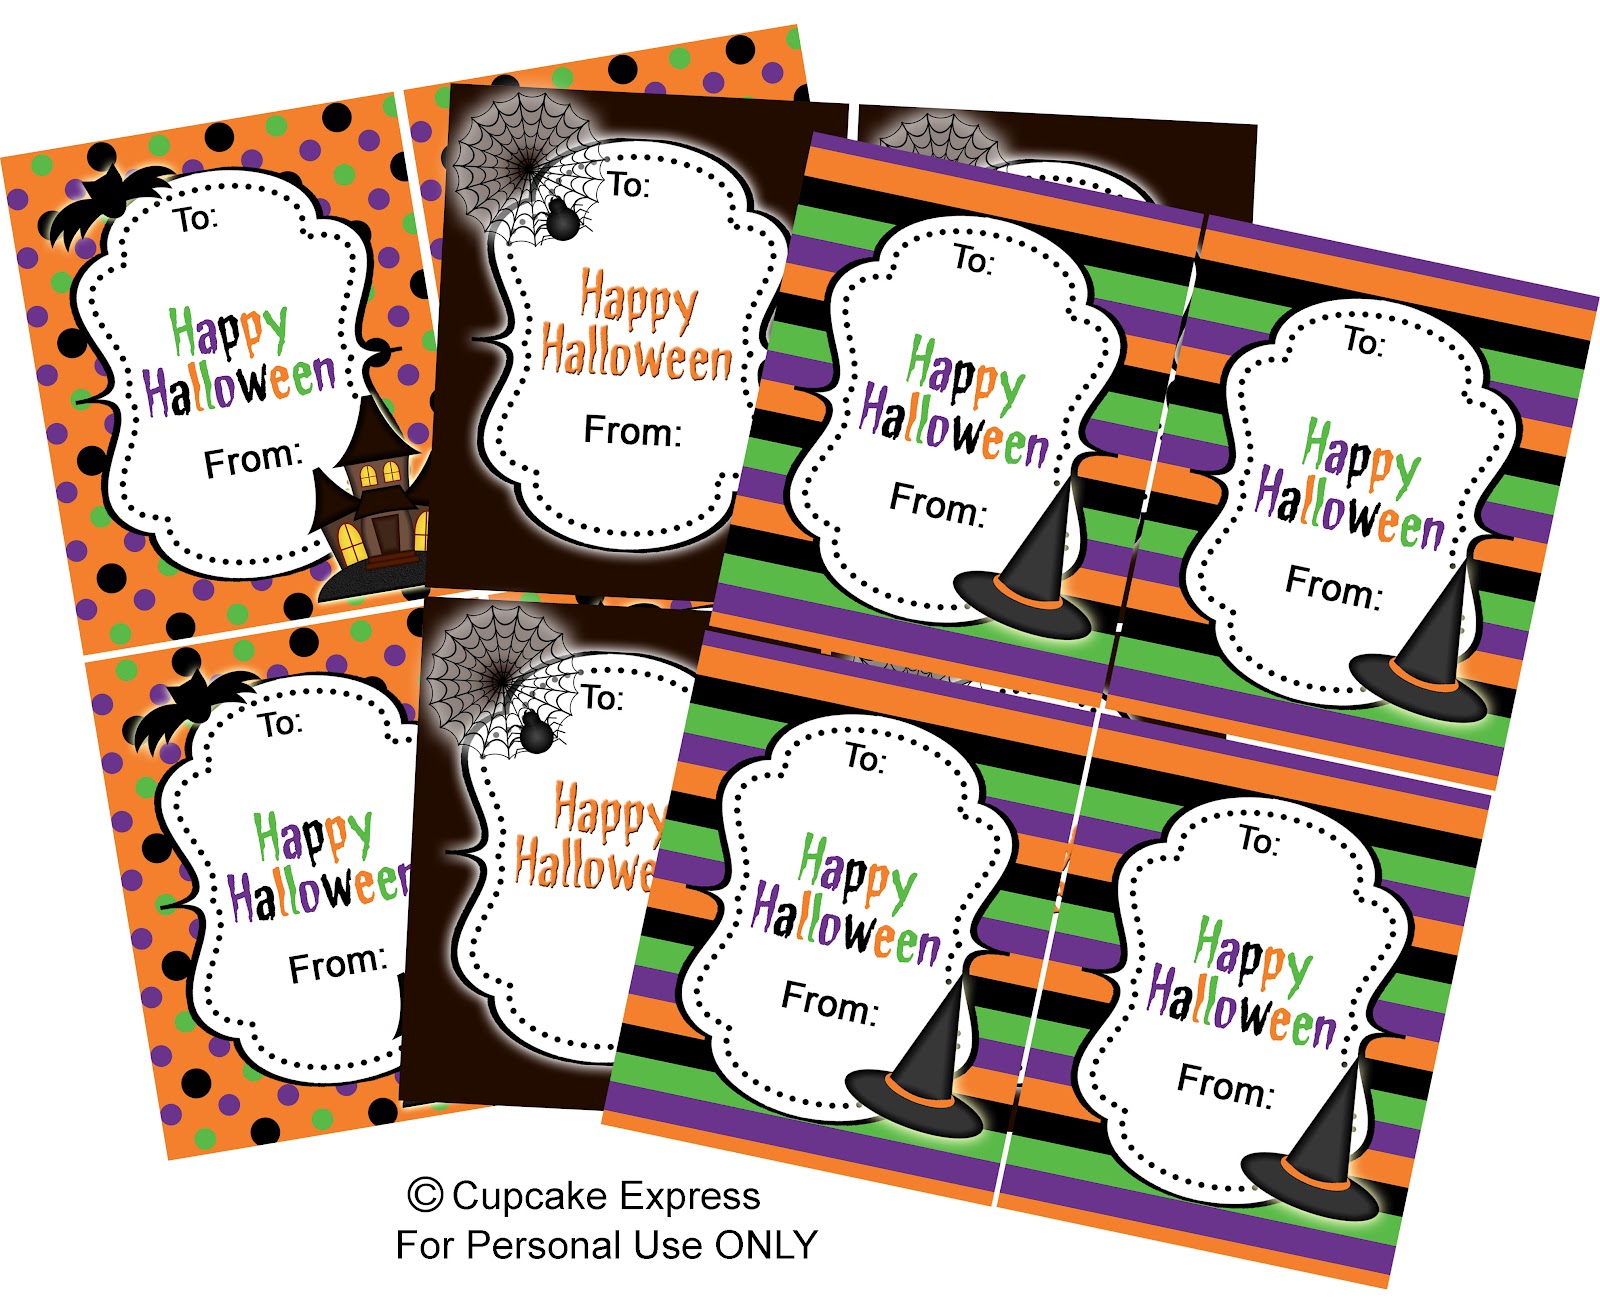 cupcake-express-free-printable-halloween-gift-tags